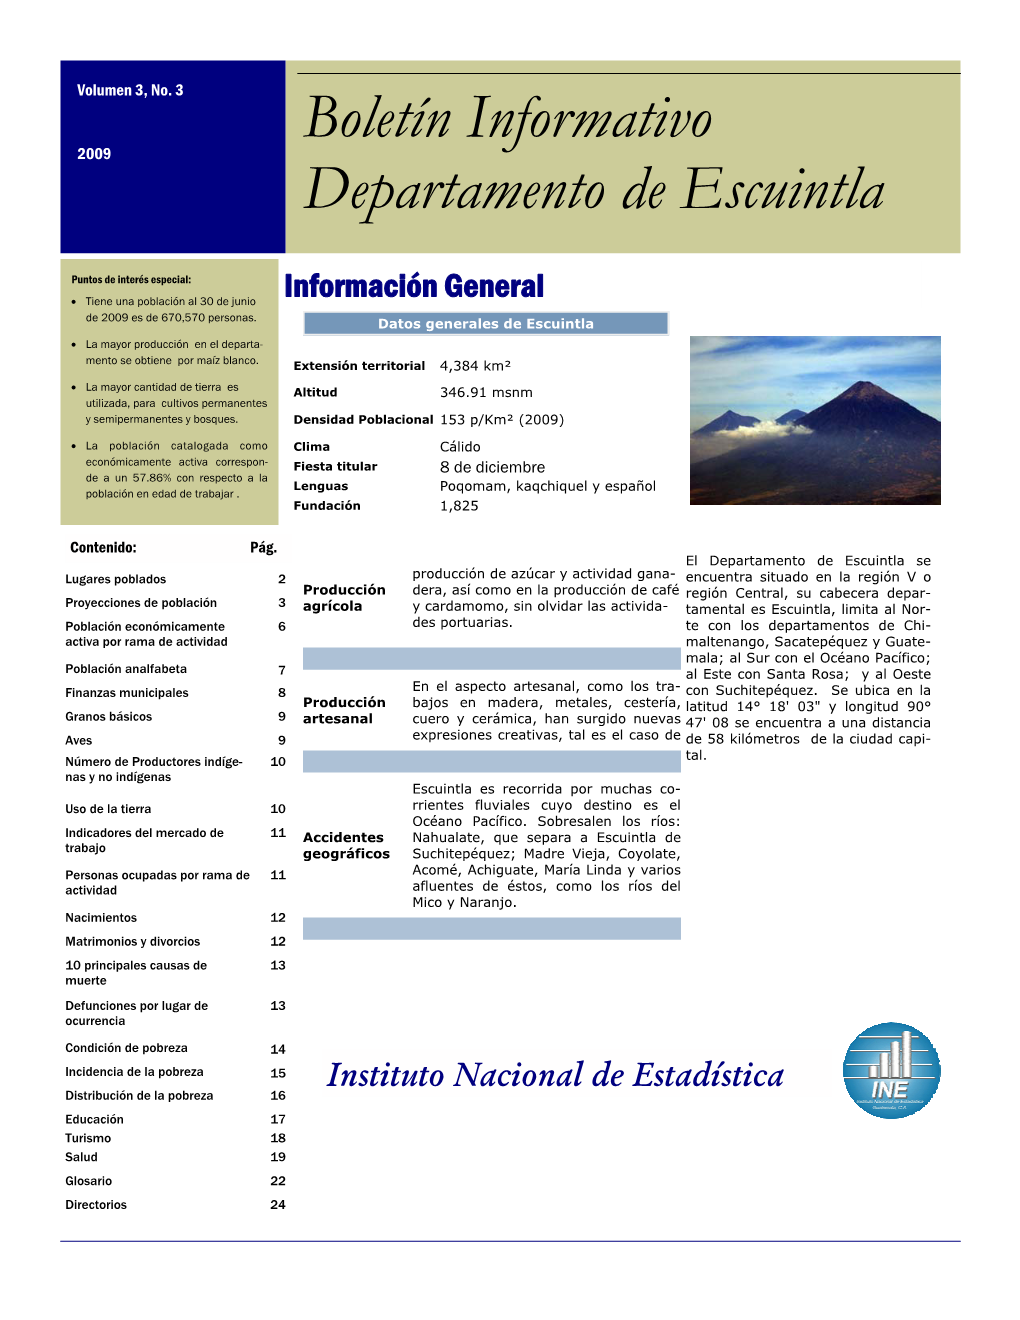 Boletín Informativo Departamento De Escuintla